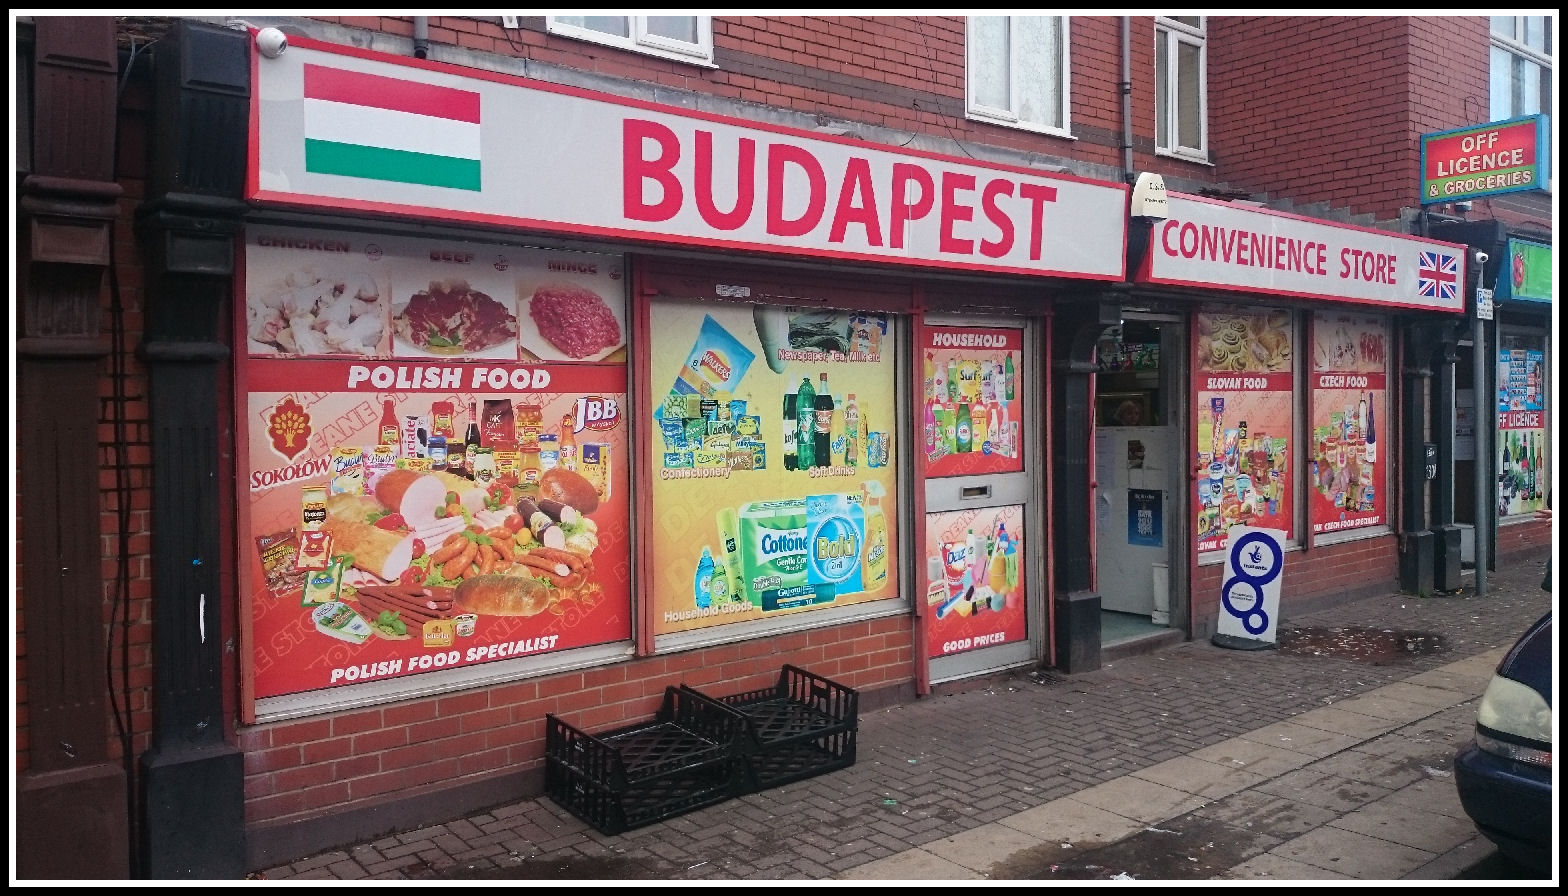 Budapest Convenience Store, Deane Road, Bolton, BL3